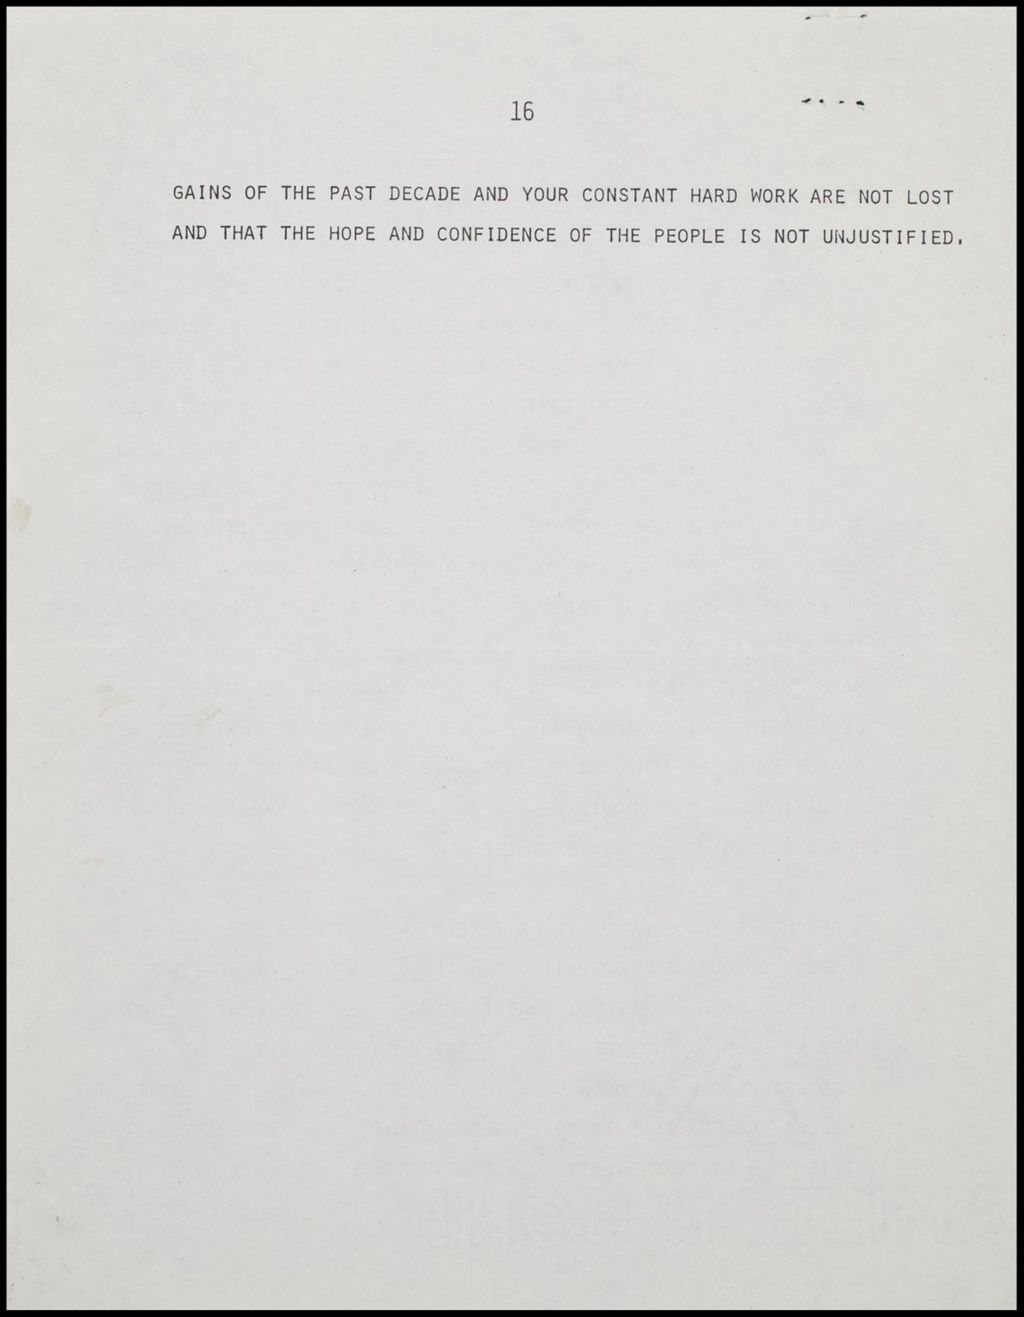 Miniature of Program Information - Committee Report, 1973 (Folder II-1008)